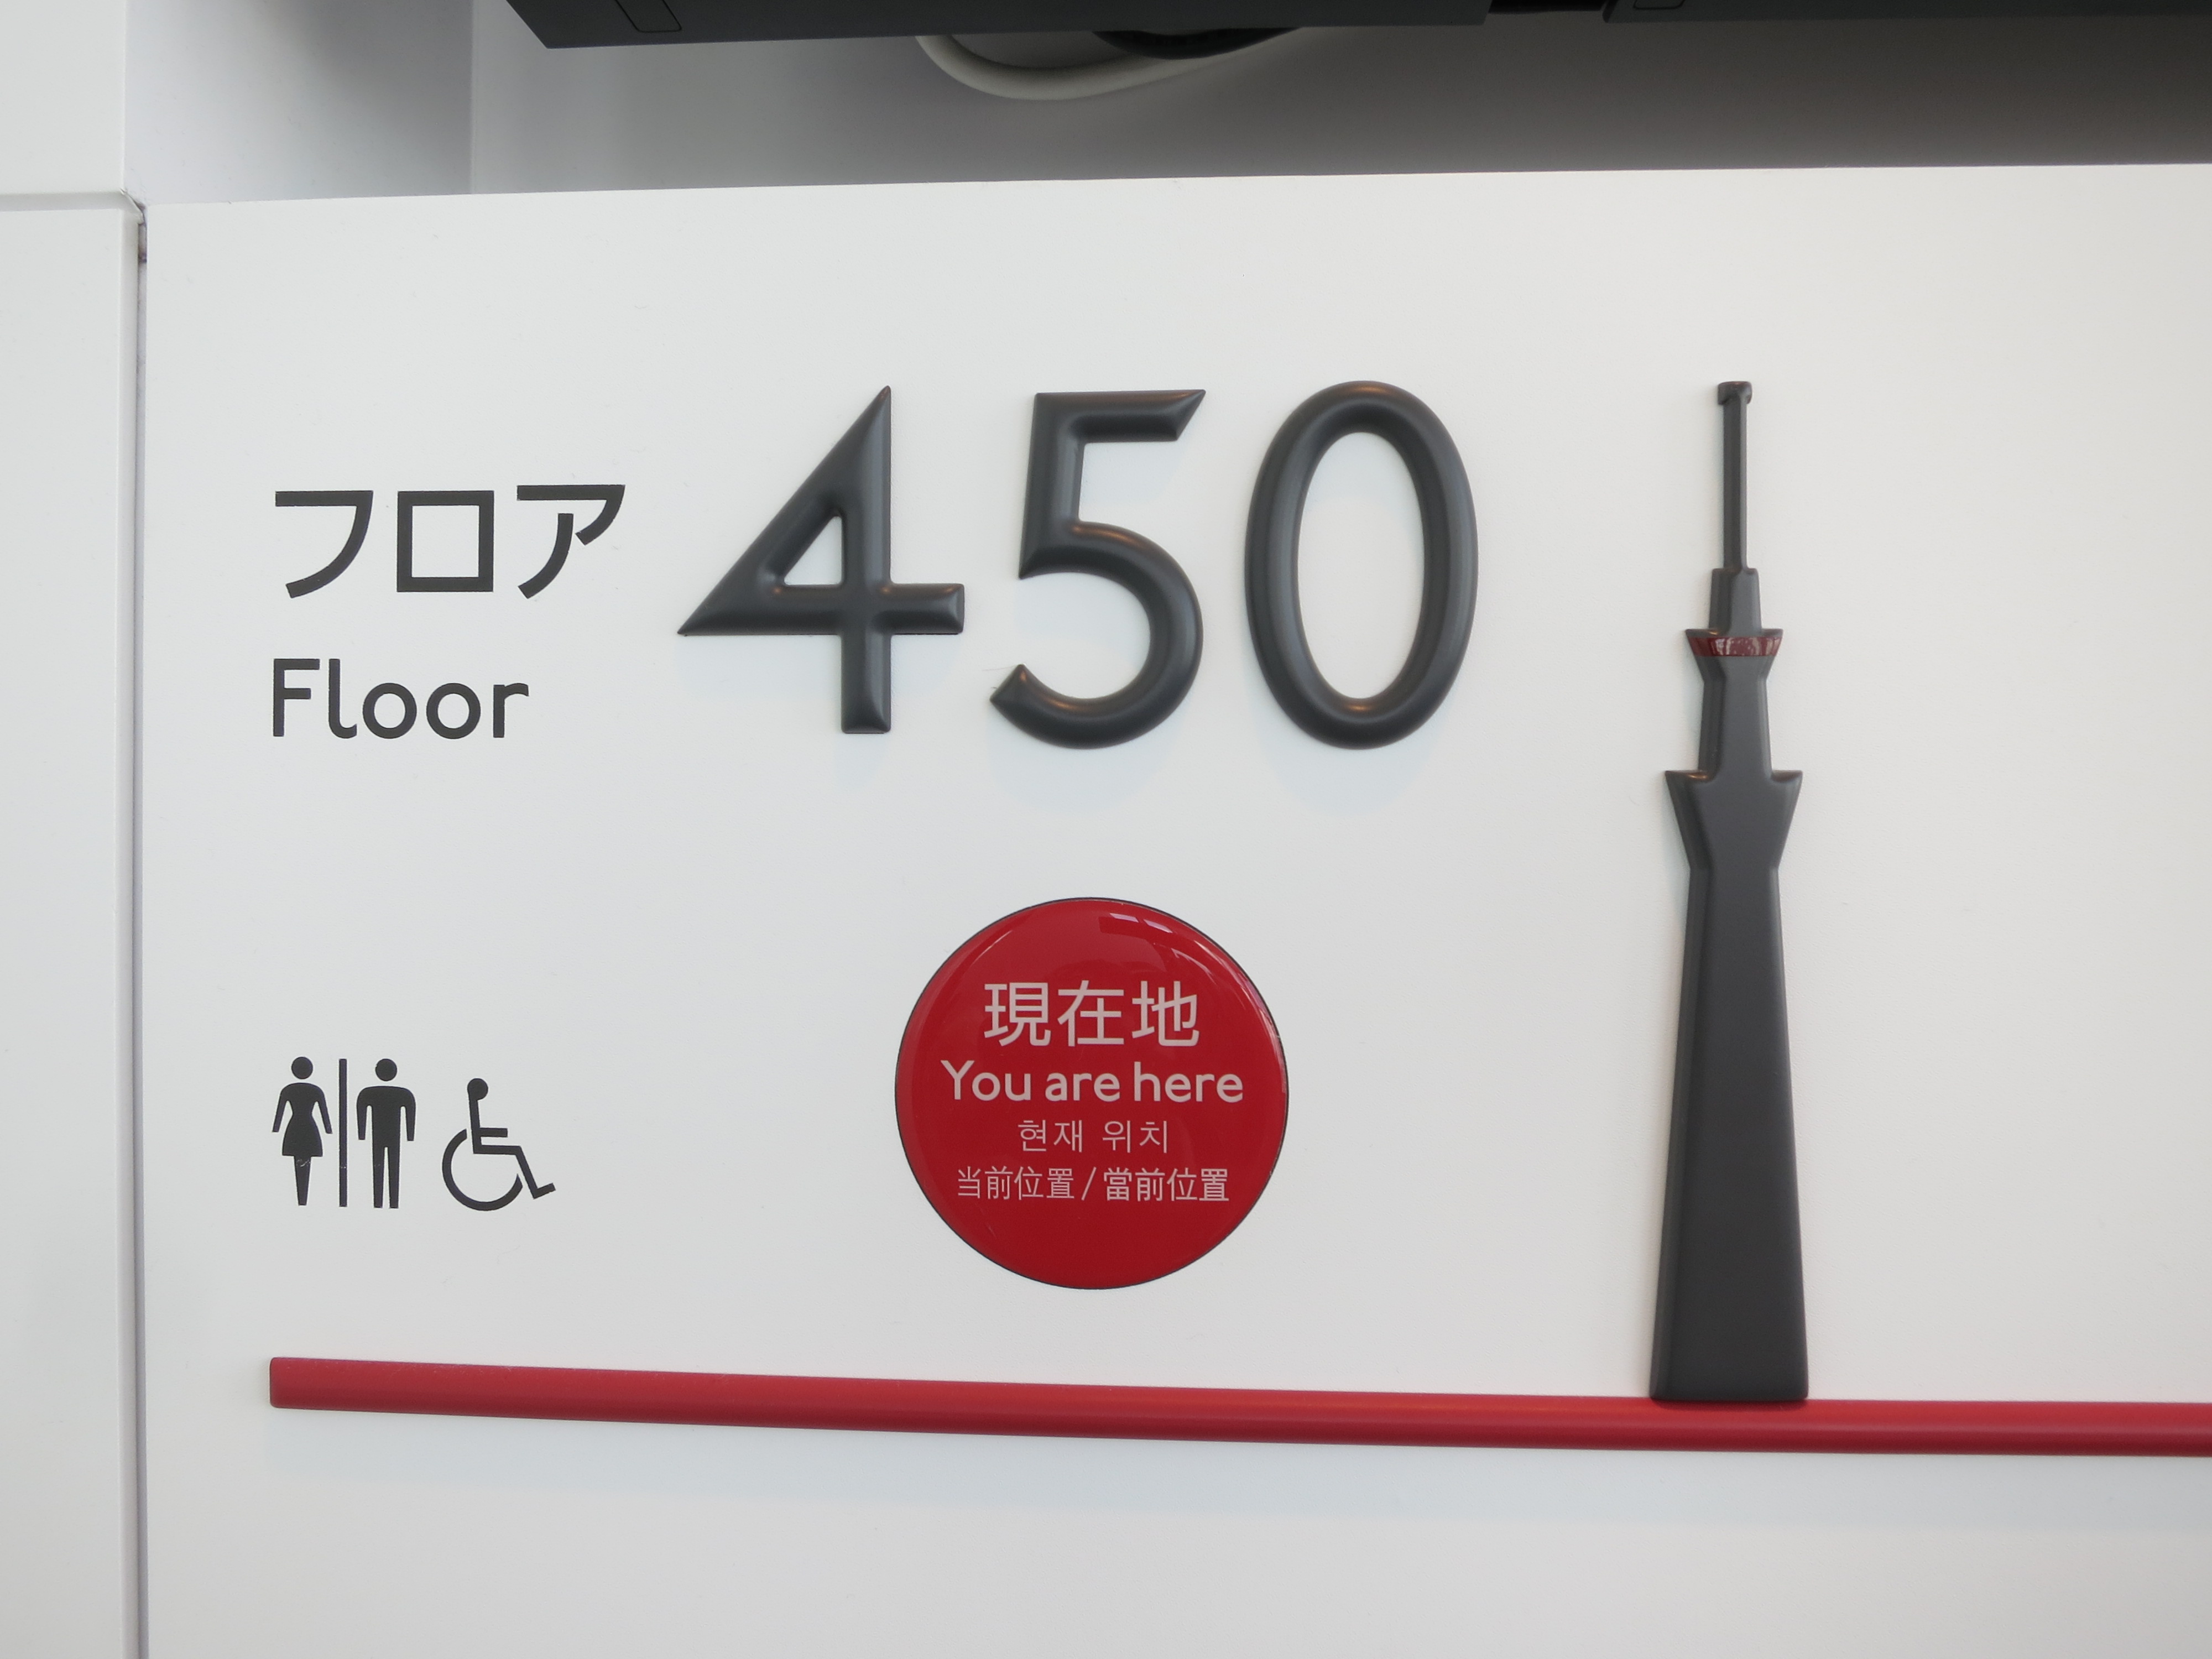 [Image: tokyo-sky-tree-33-450-floor-sign.jpg]